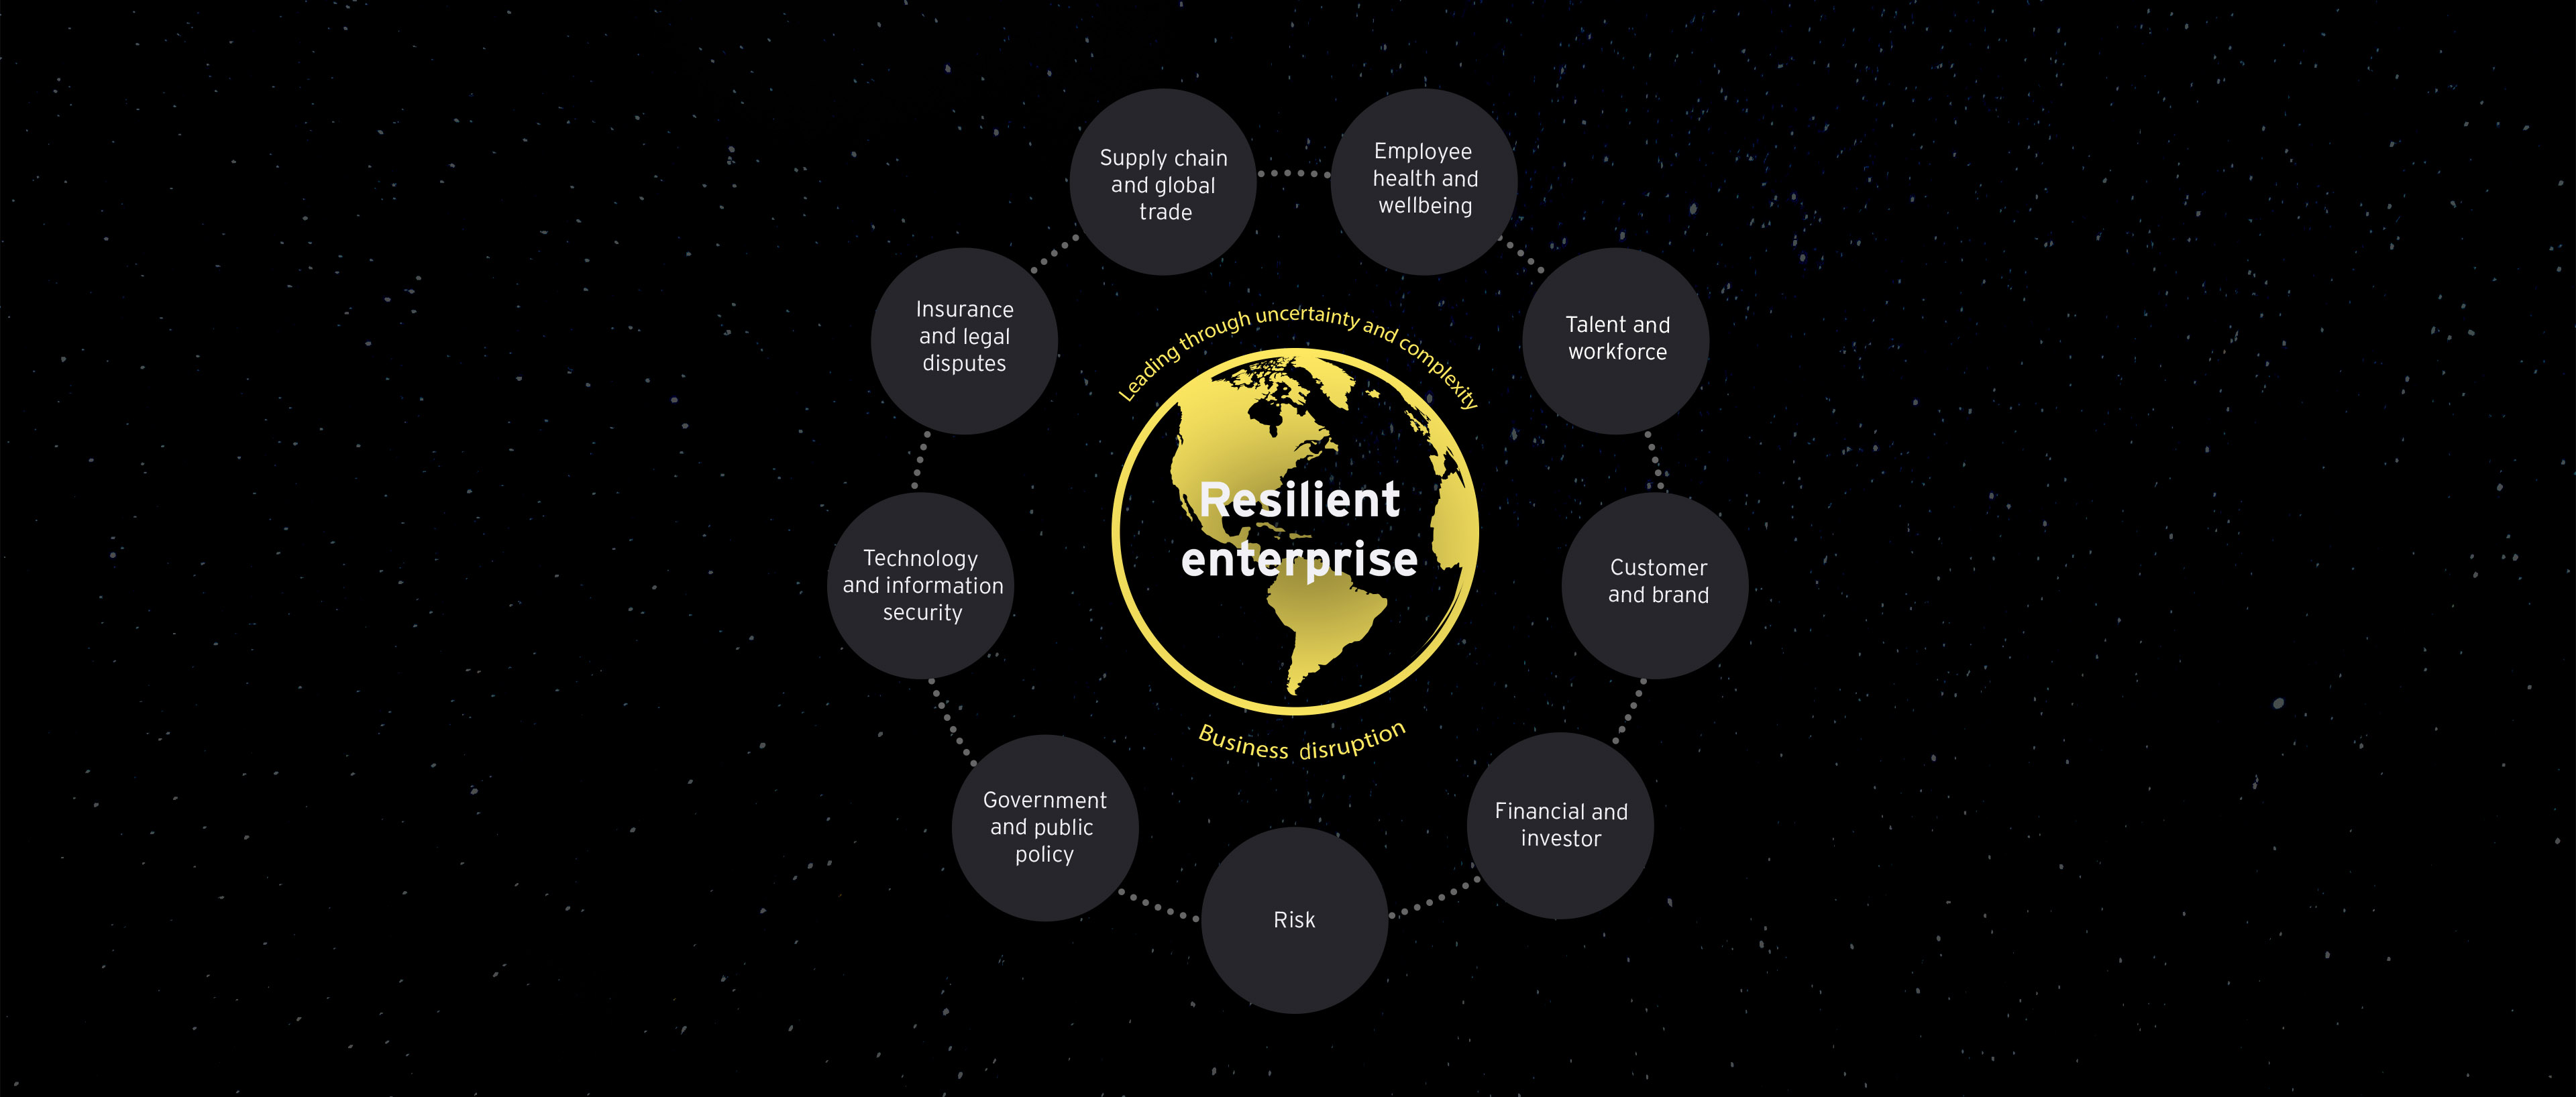 Resilience enterprise navigation